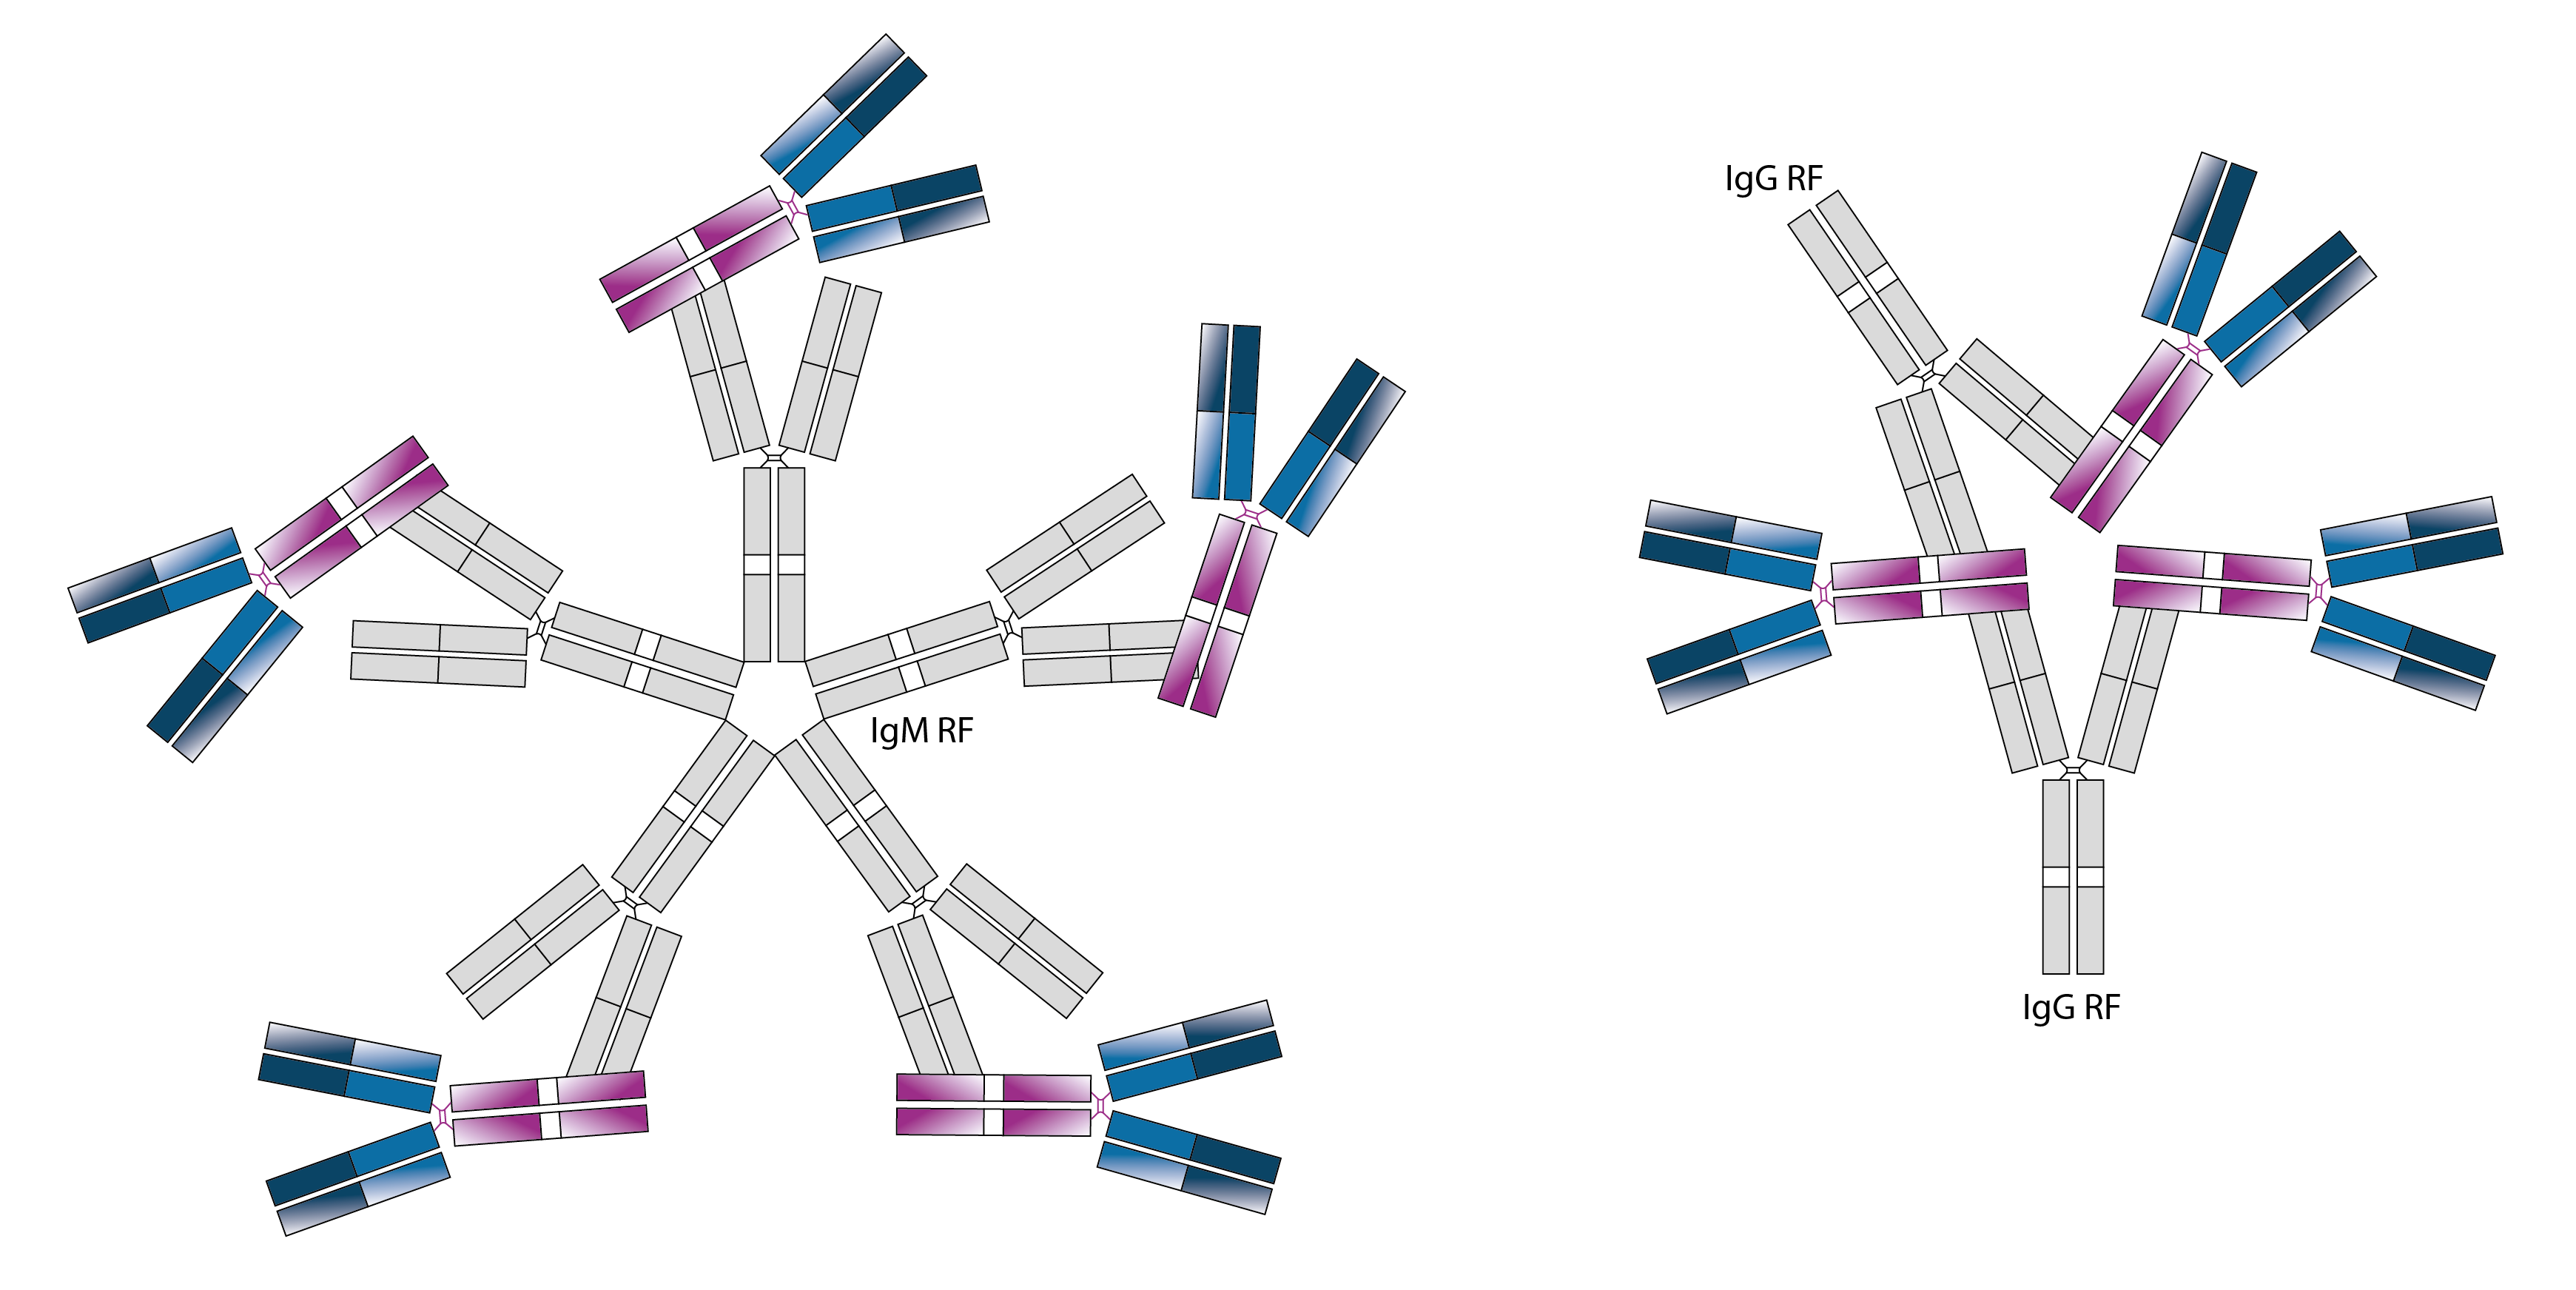 Antibody-03 for web